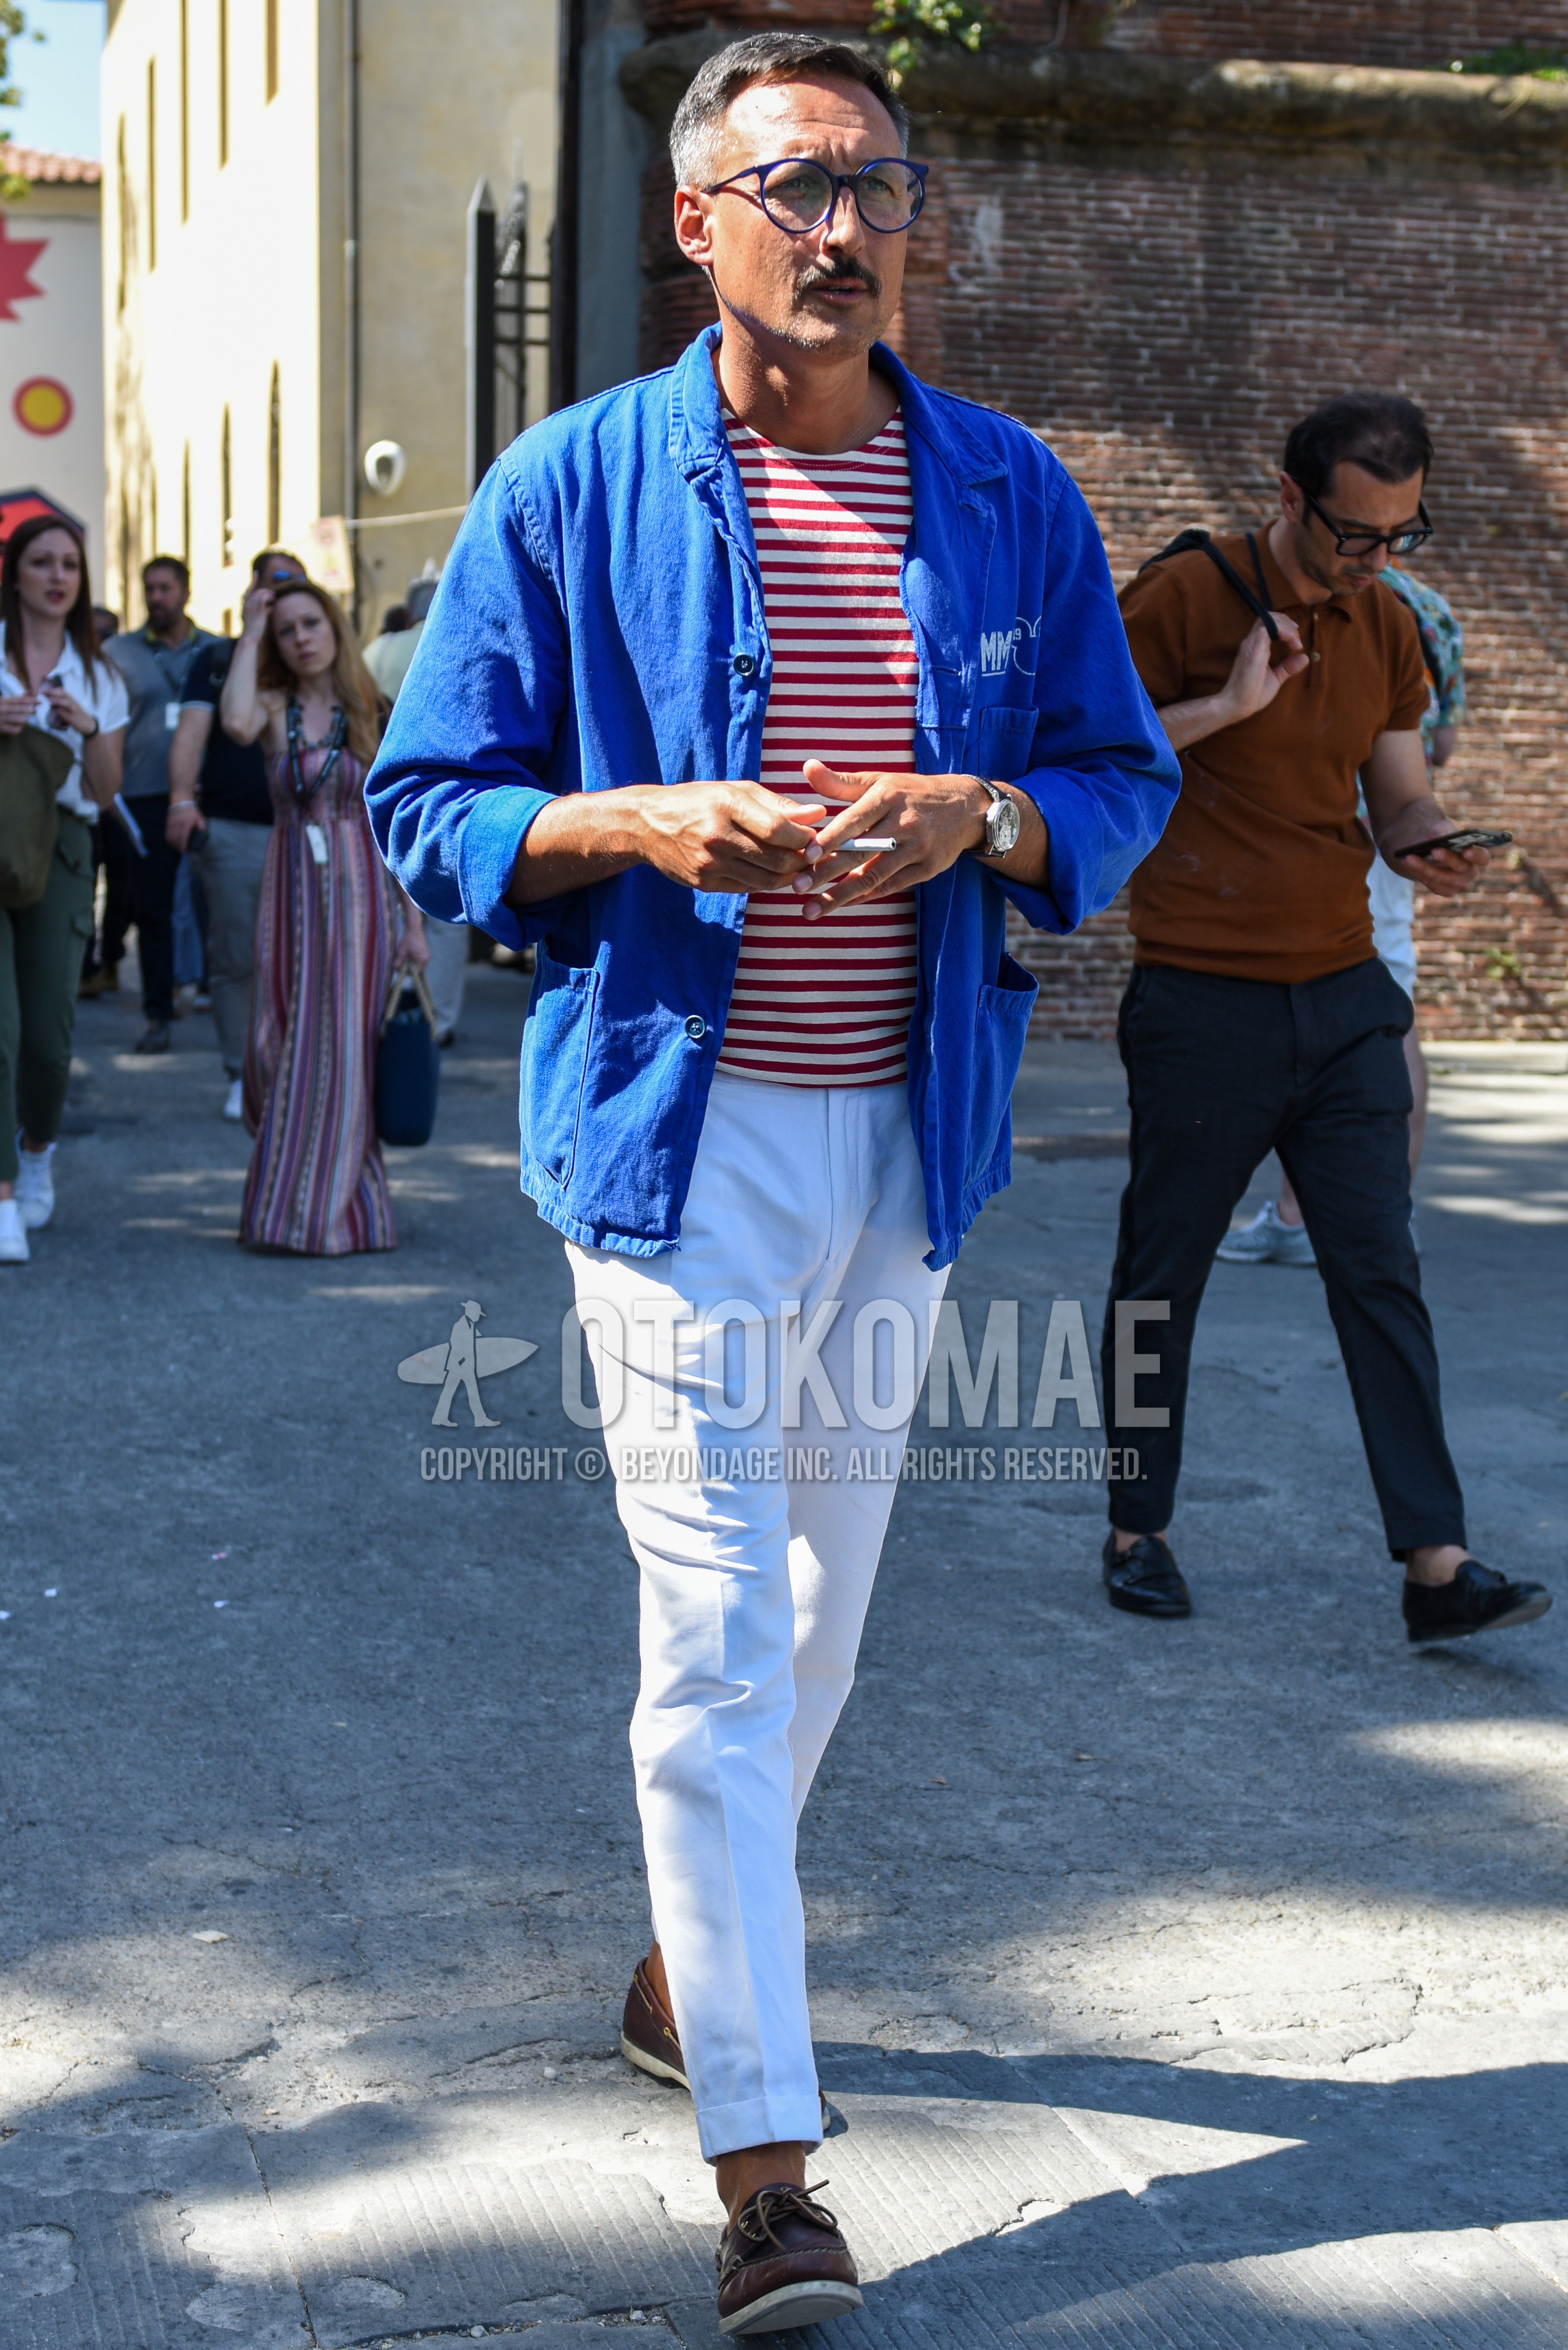 Men's spring summer autumn outfit with blue plain glasses, blue plain shirt jacket, white red horizontal stripes t-shirt, white plain cotton pants, brown moccasins/deck shoes leather shoes.